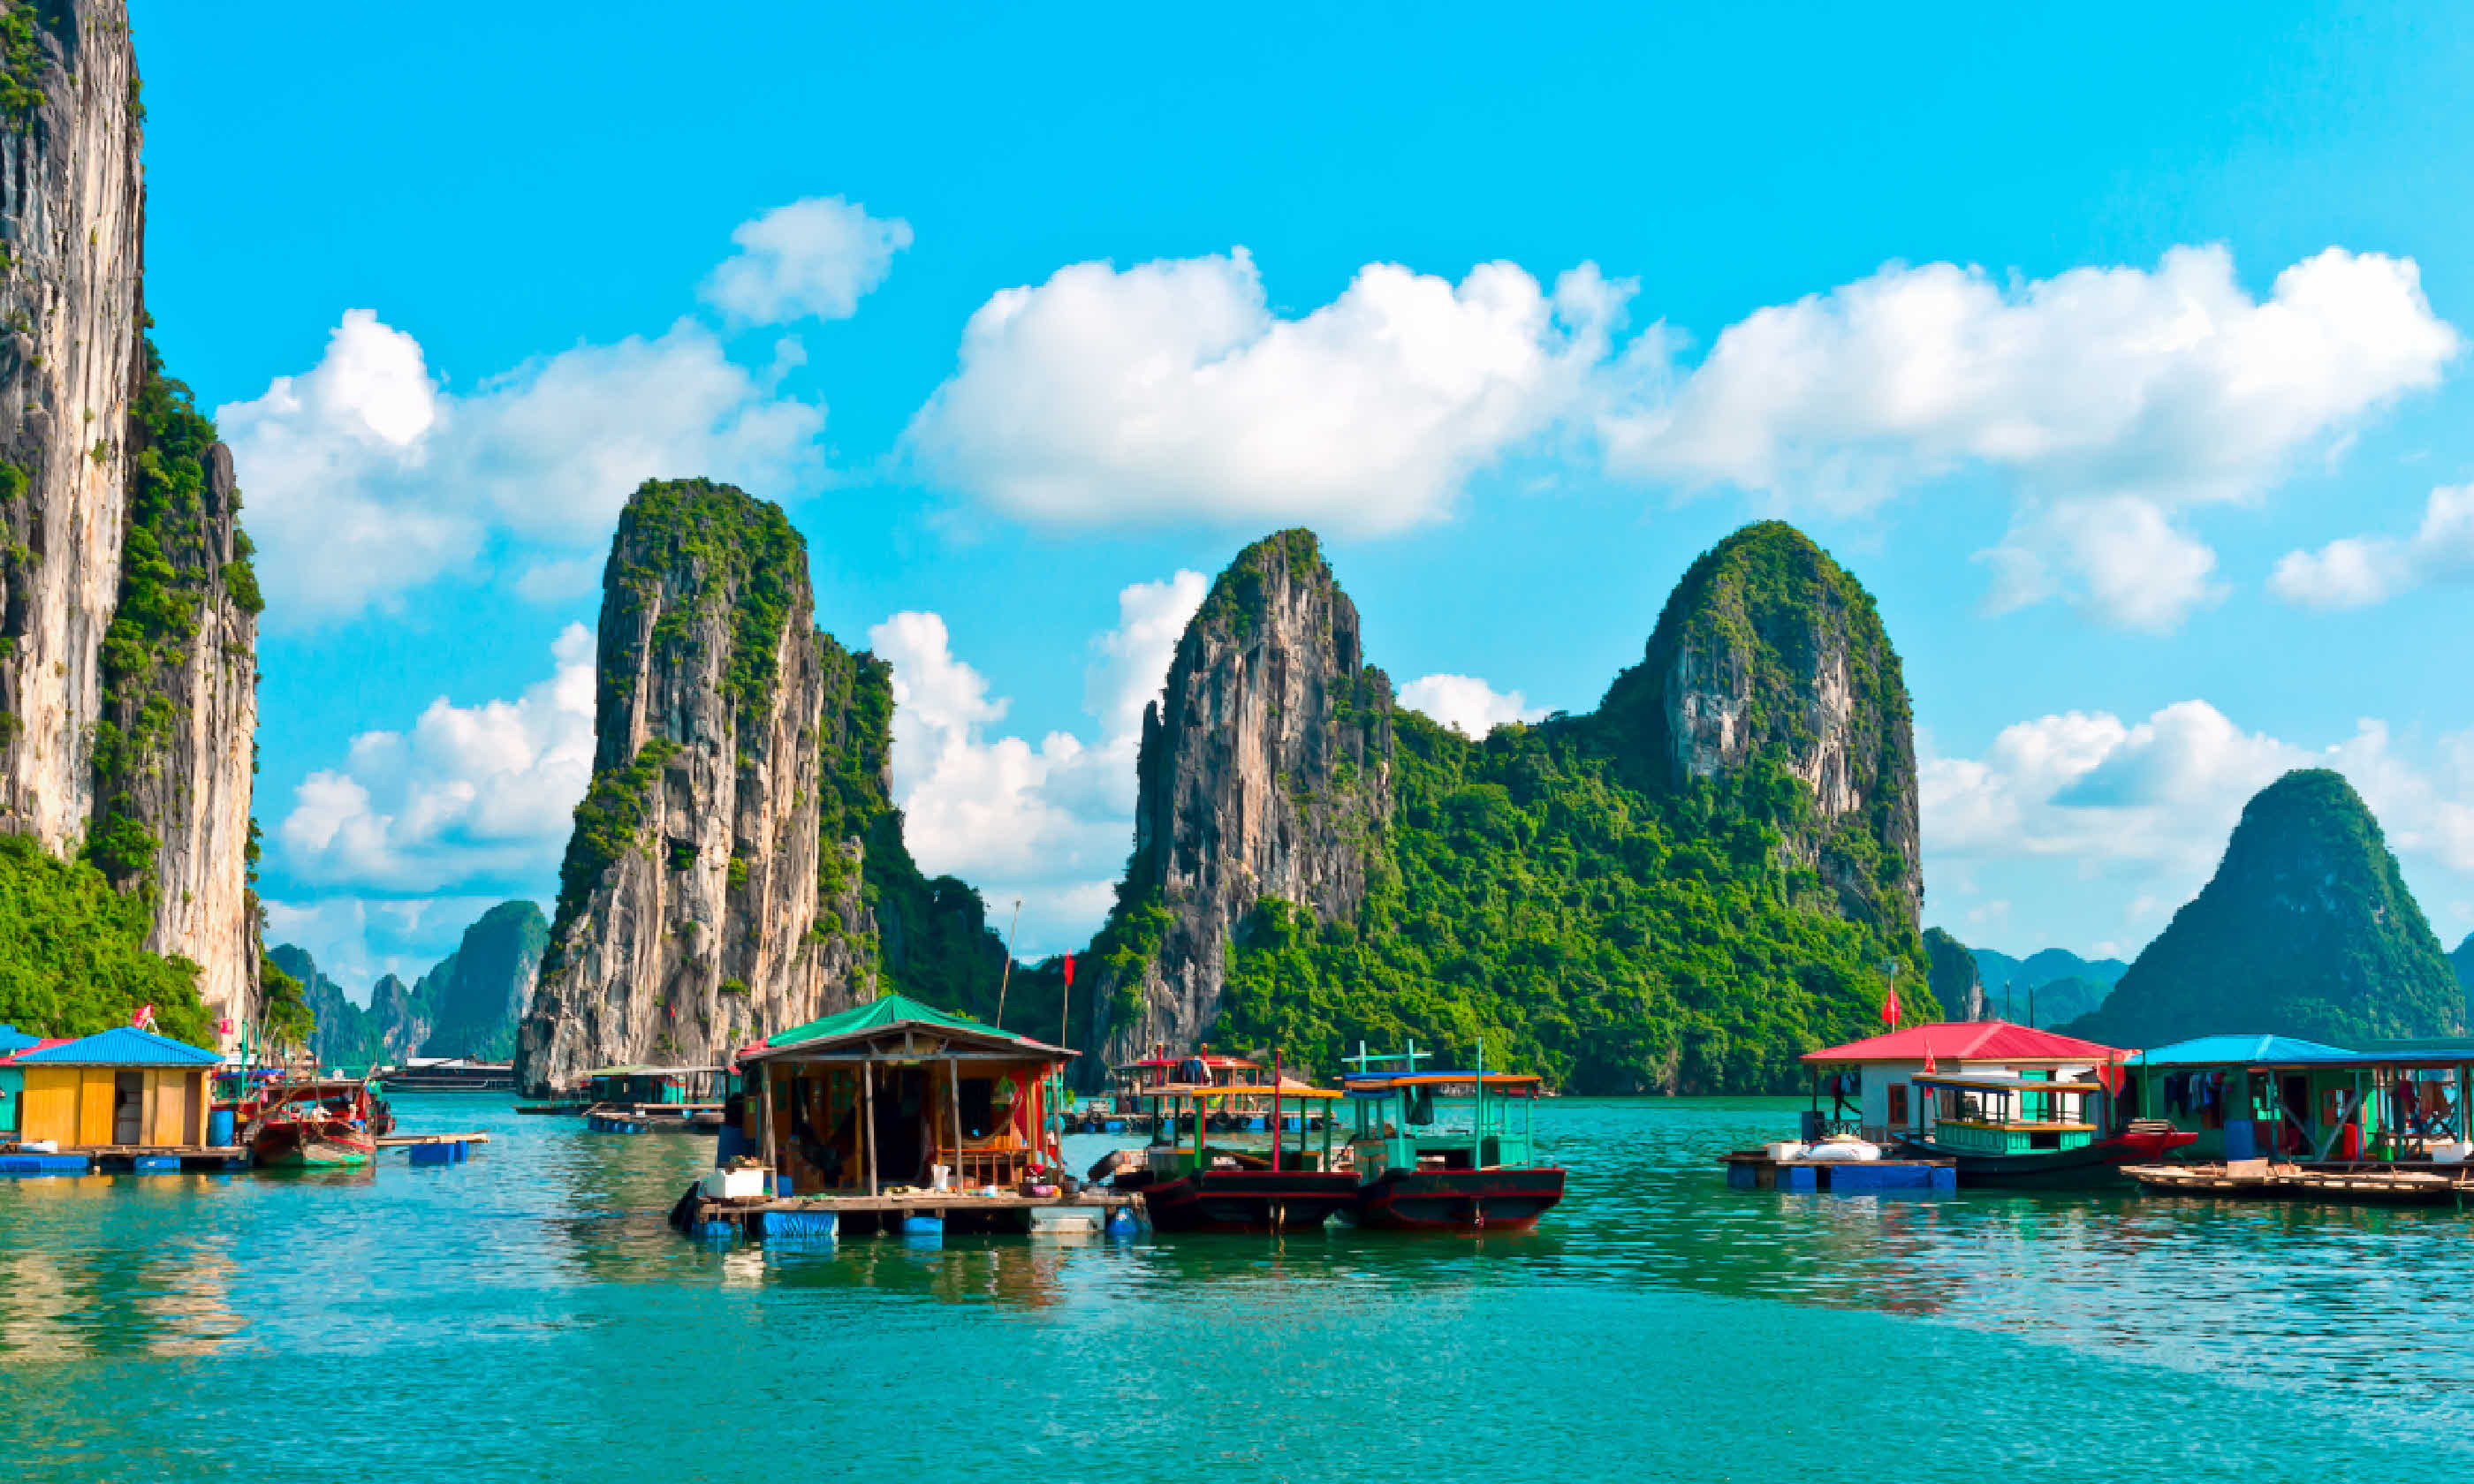 Floating village and rock islands in Halong Bay, Vietnam (Shutterstock)